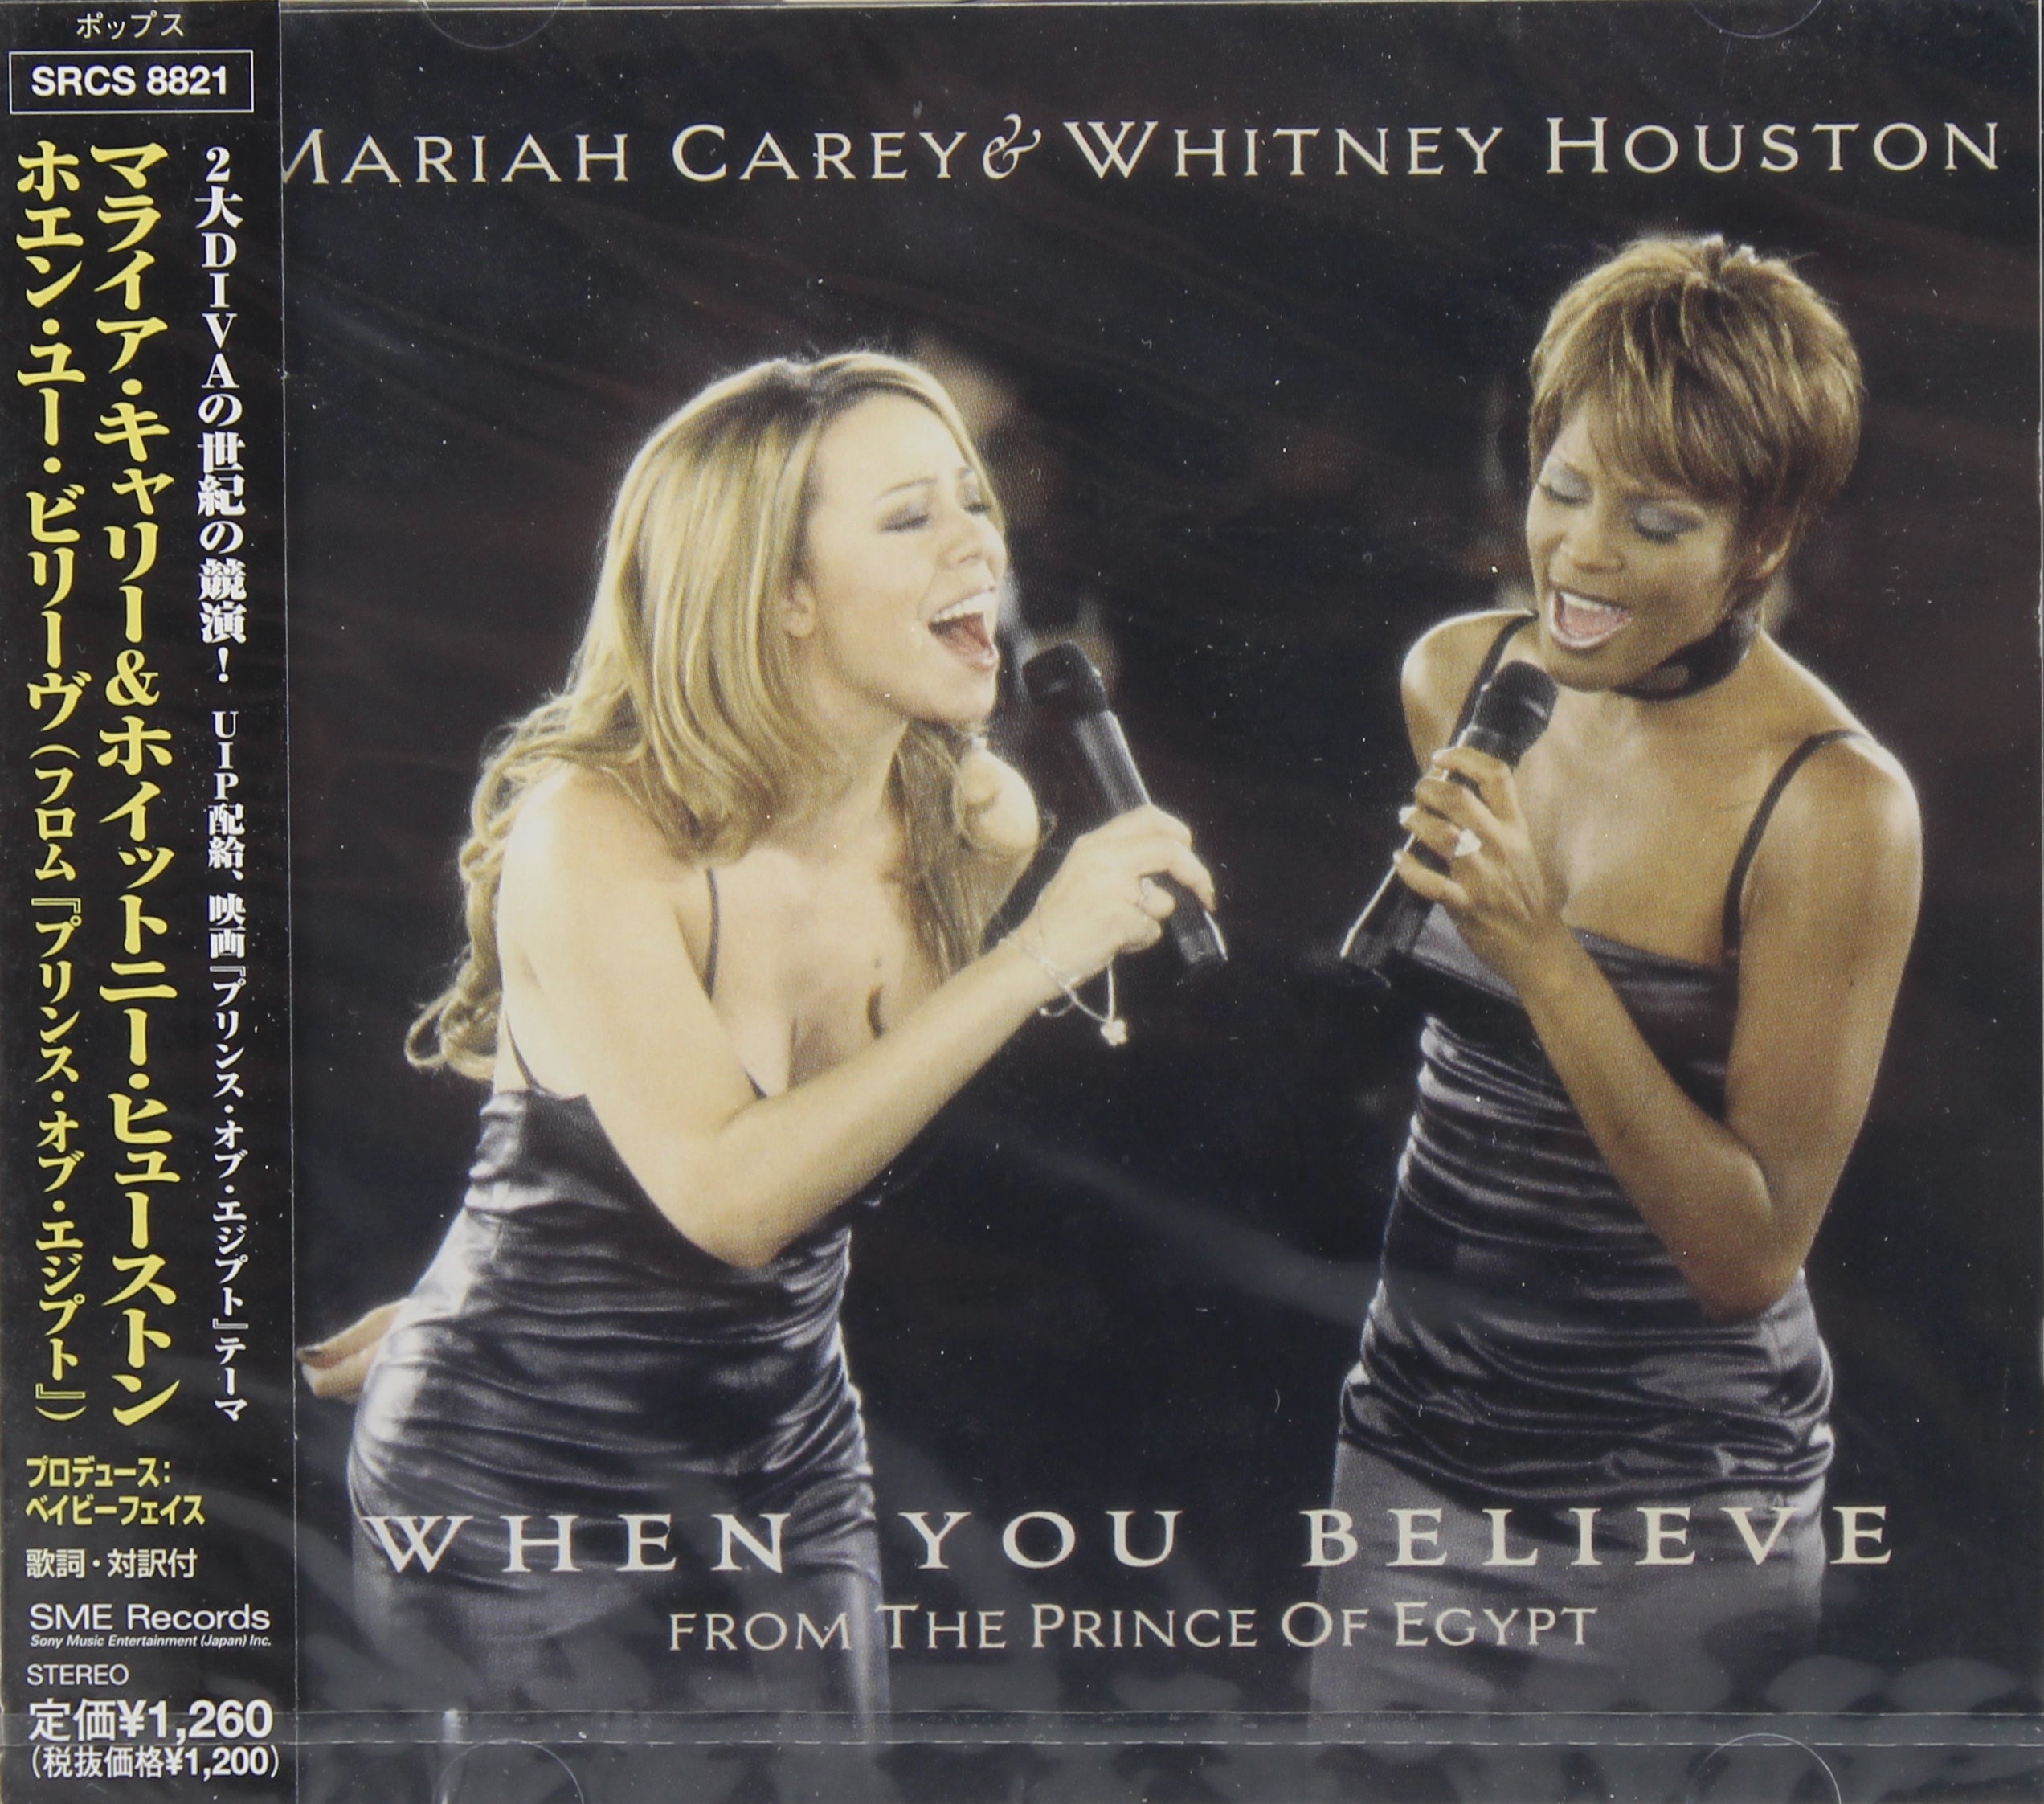 Mariah Carey, Whitney Houston - When You Believe, CD Single, Japan 